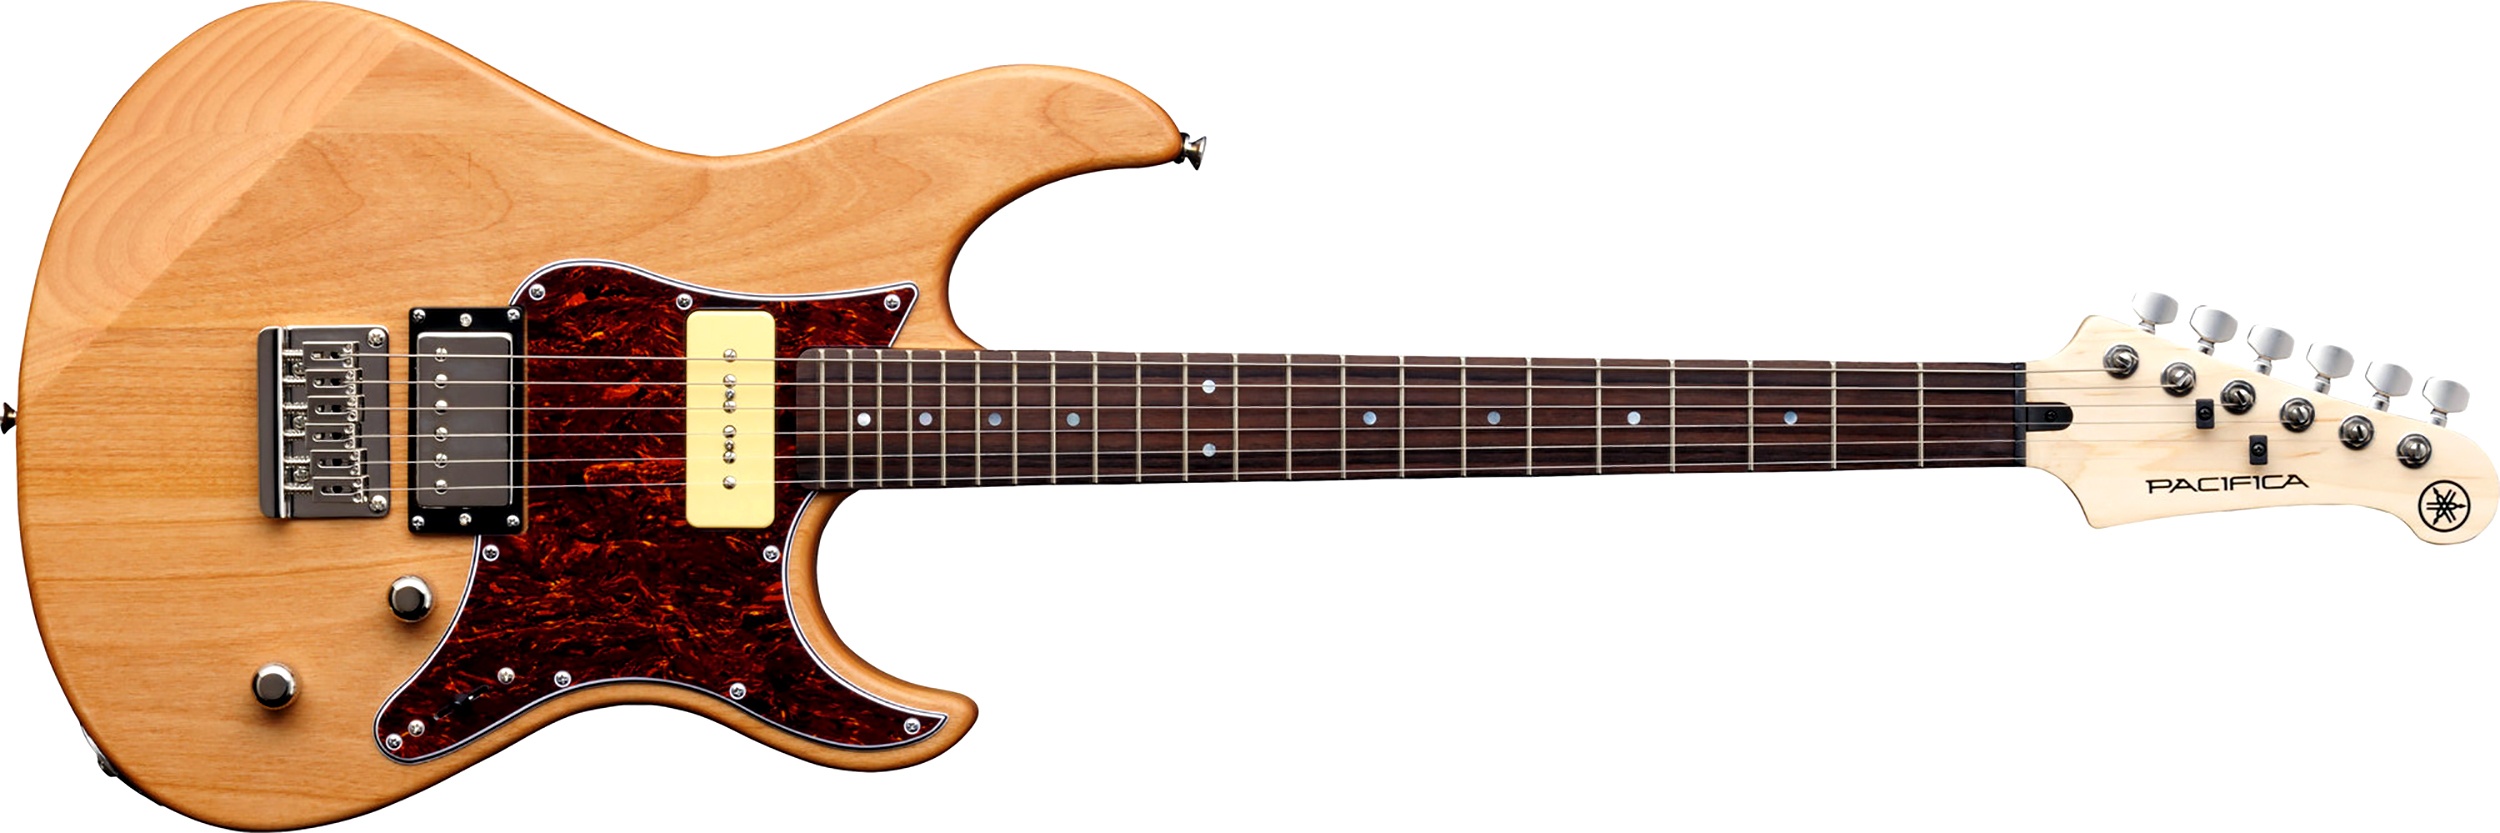 Yamaha Pacifica Pac311h - Natural Satin - Guitarra eléctrica con forma de str. - Variation 1